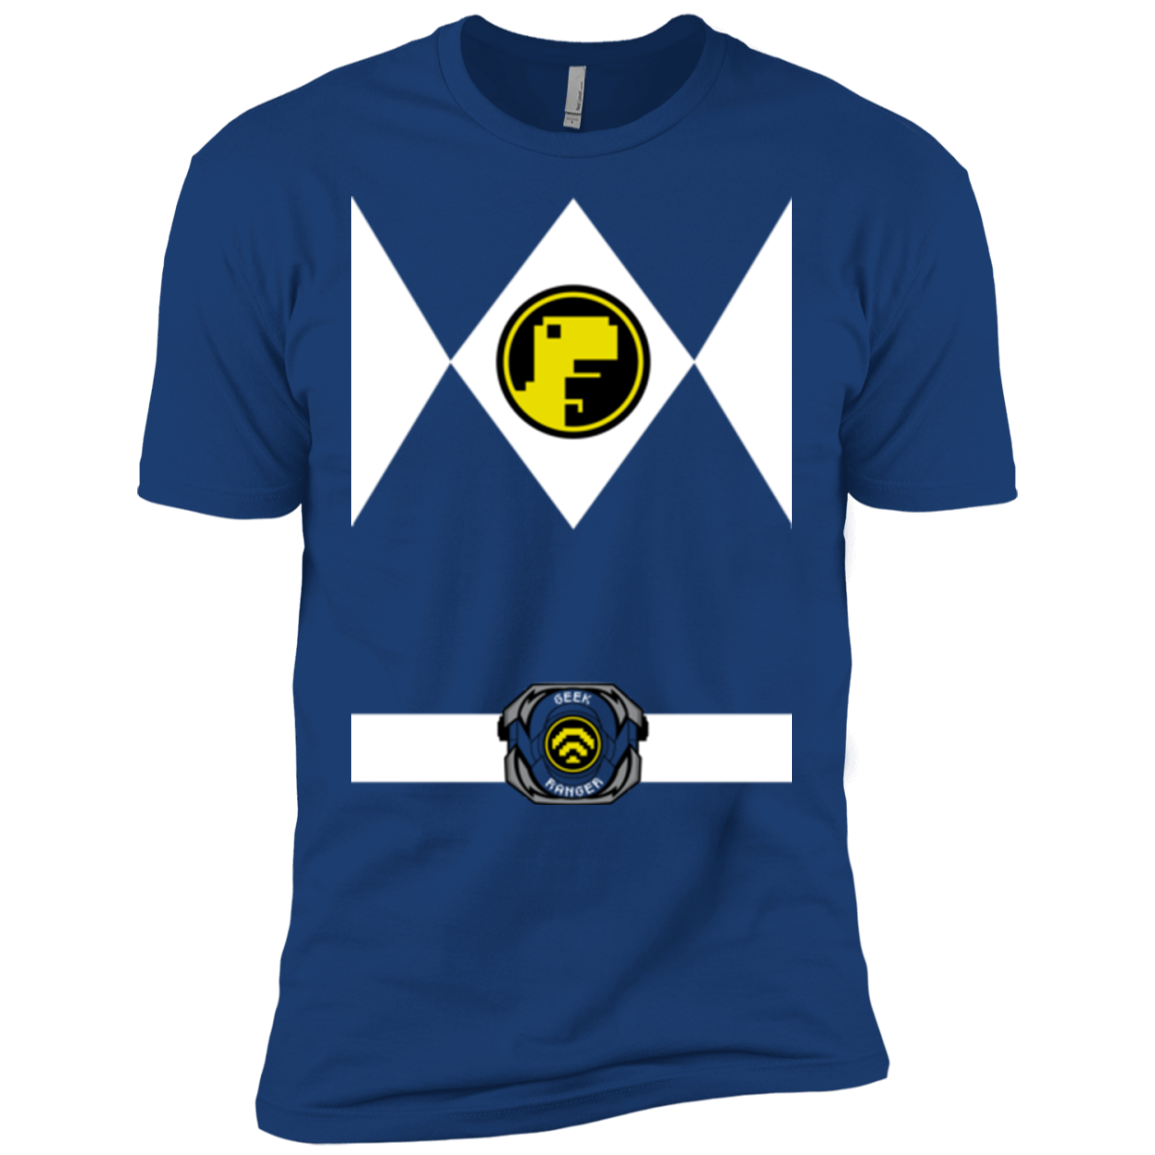 Geek Ranger Men's Premium T-Shirt